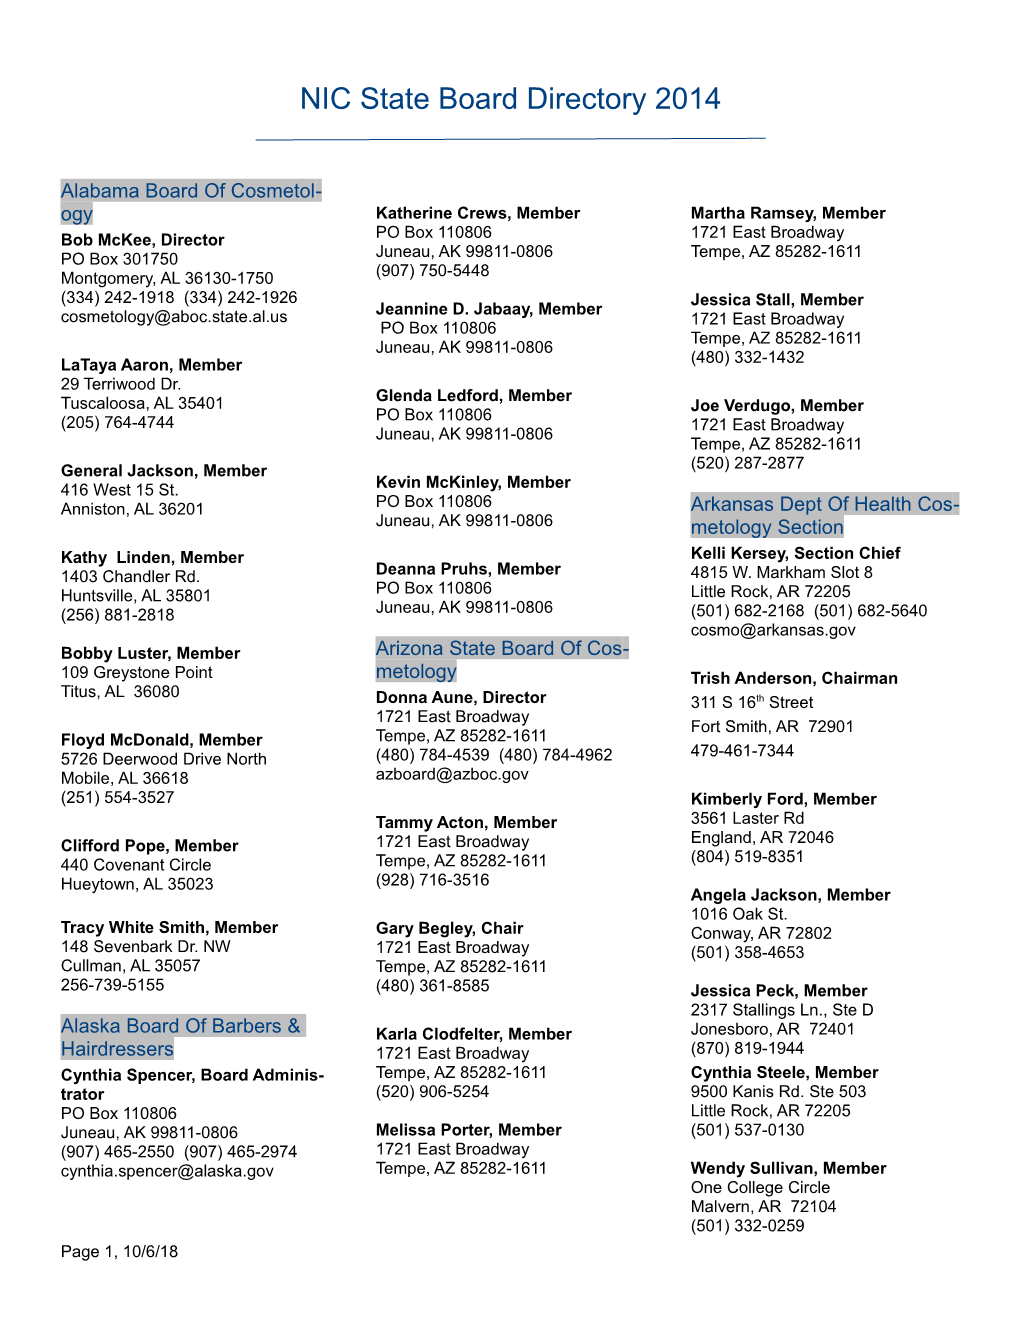 2003 2004 NIC Directory of State Board Members